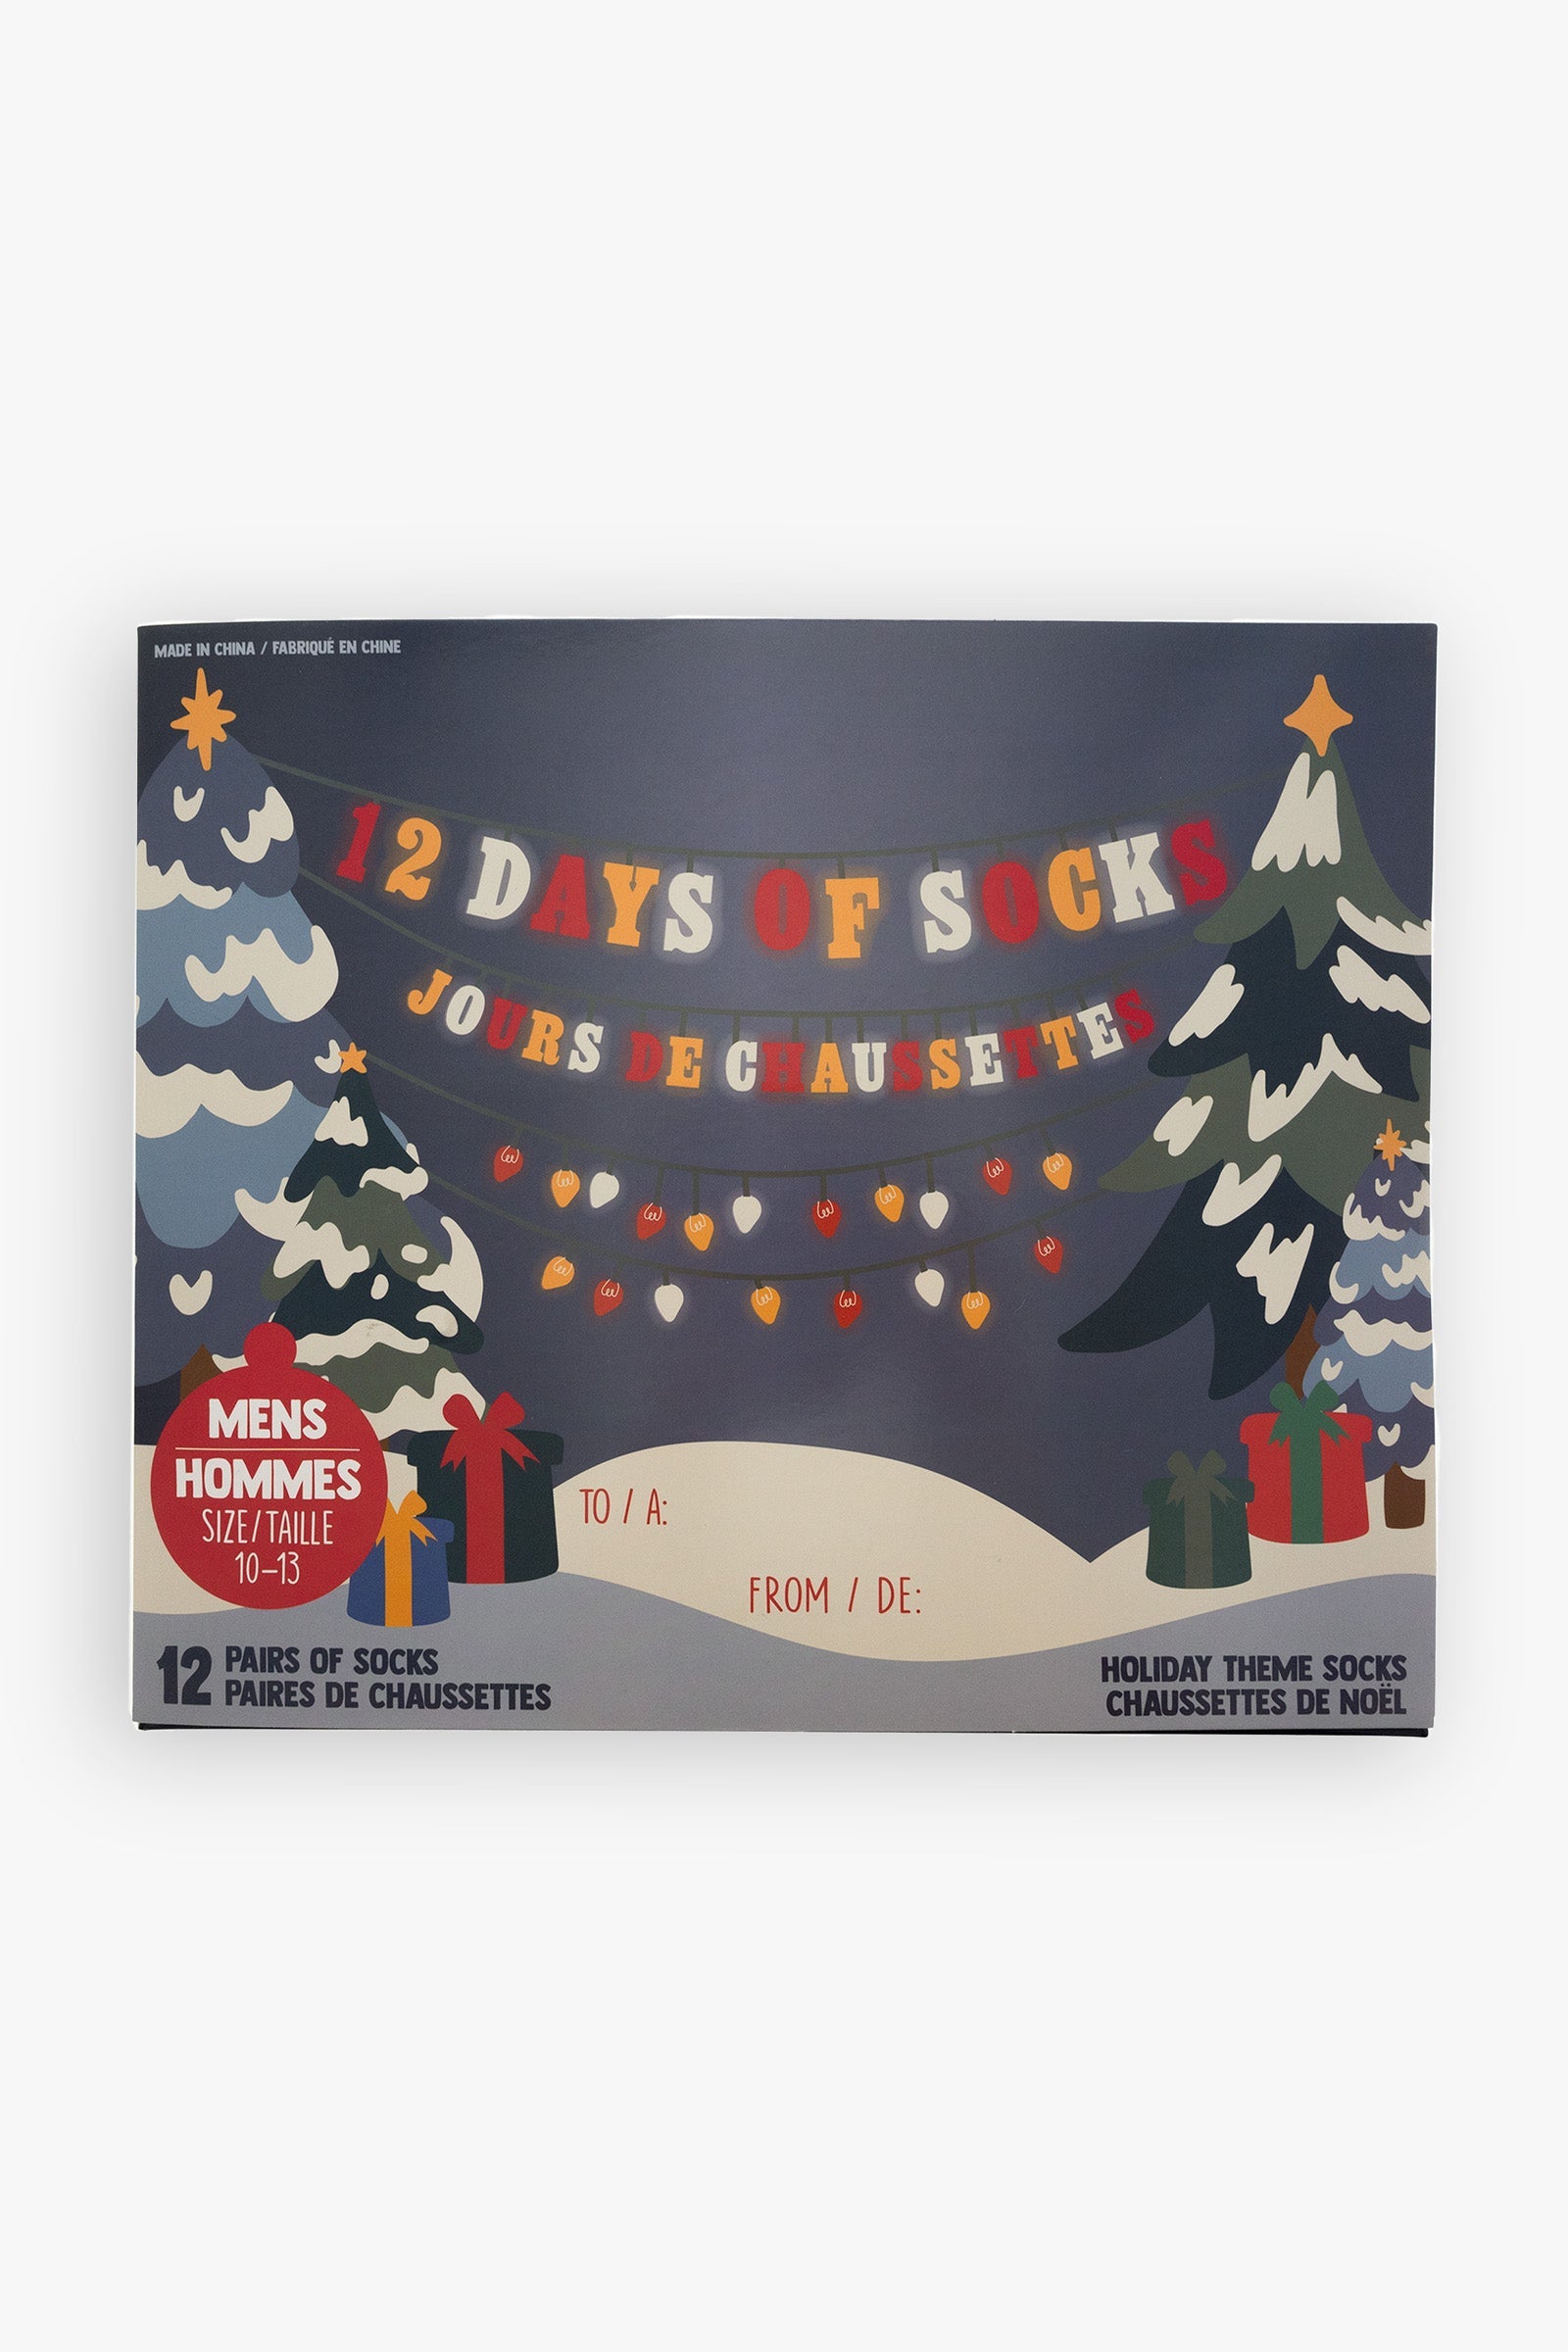 Gertex Men's "12 Days of Socks" Advent Calendar Gift Box | 12 Days of Holiday Socks